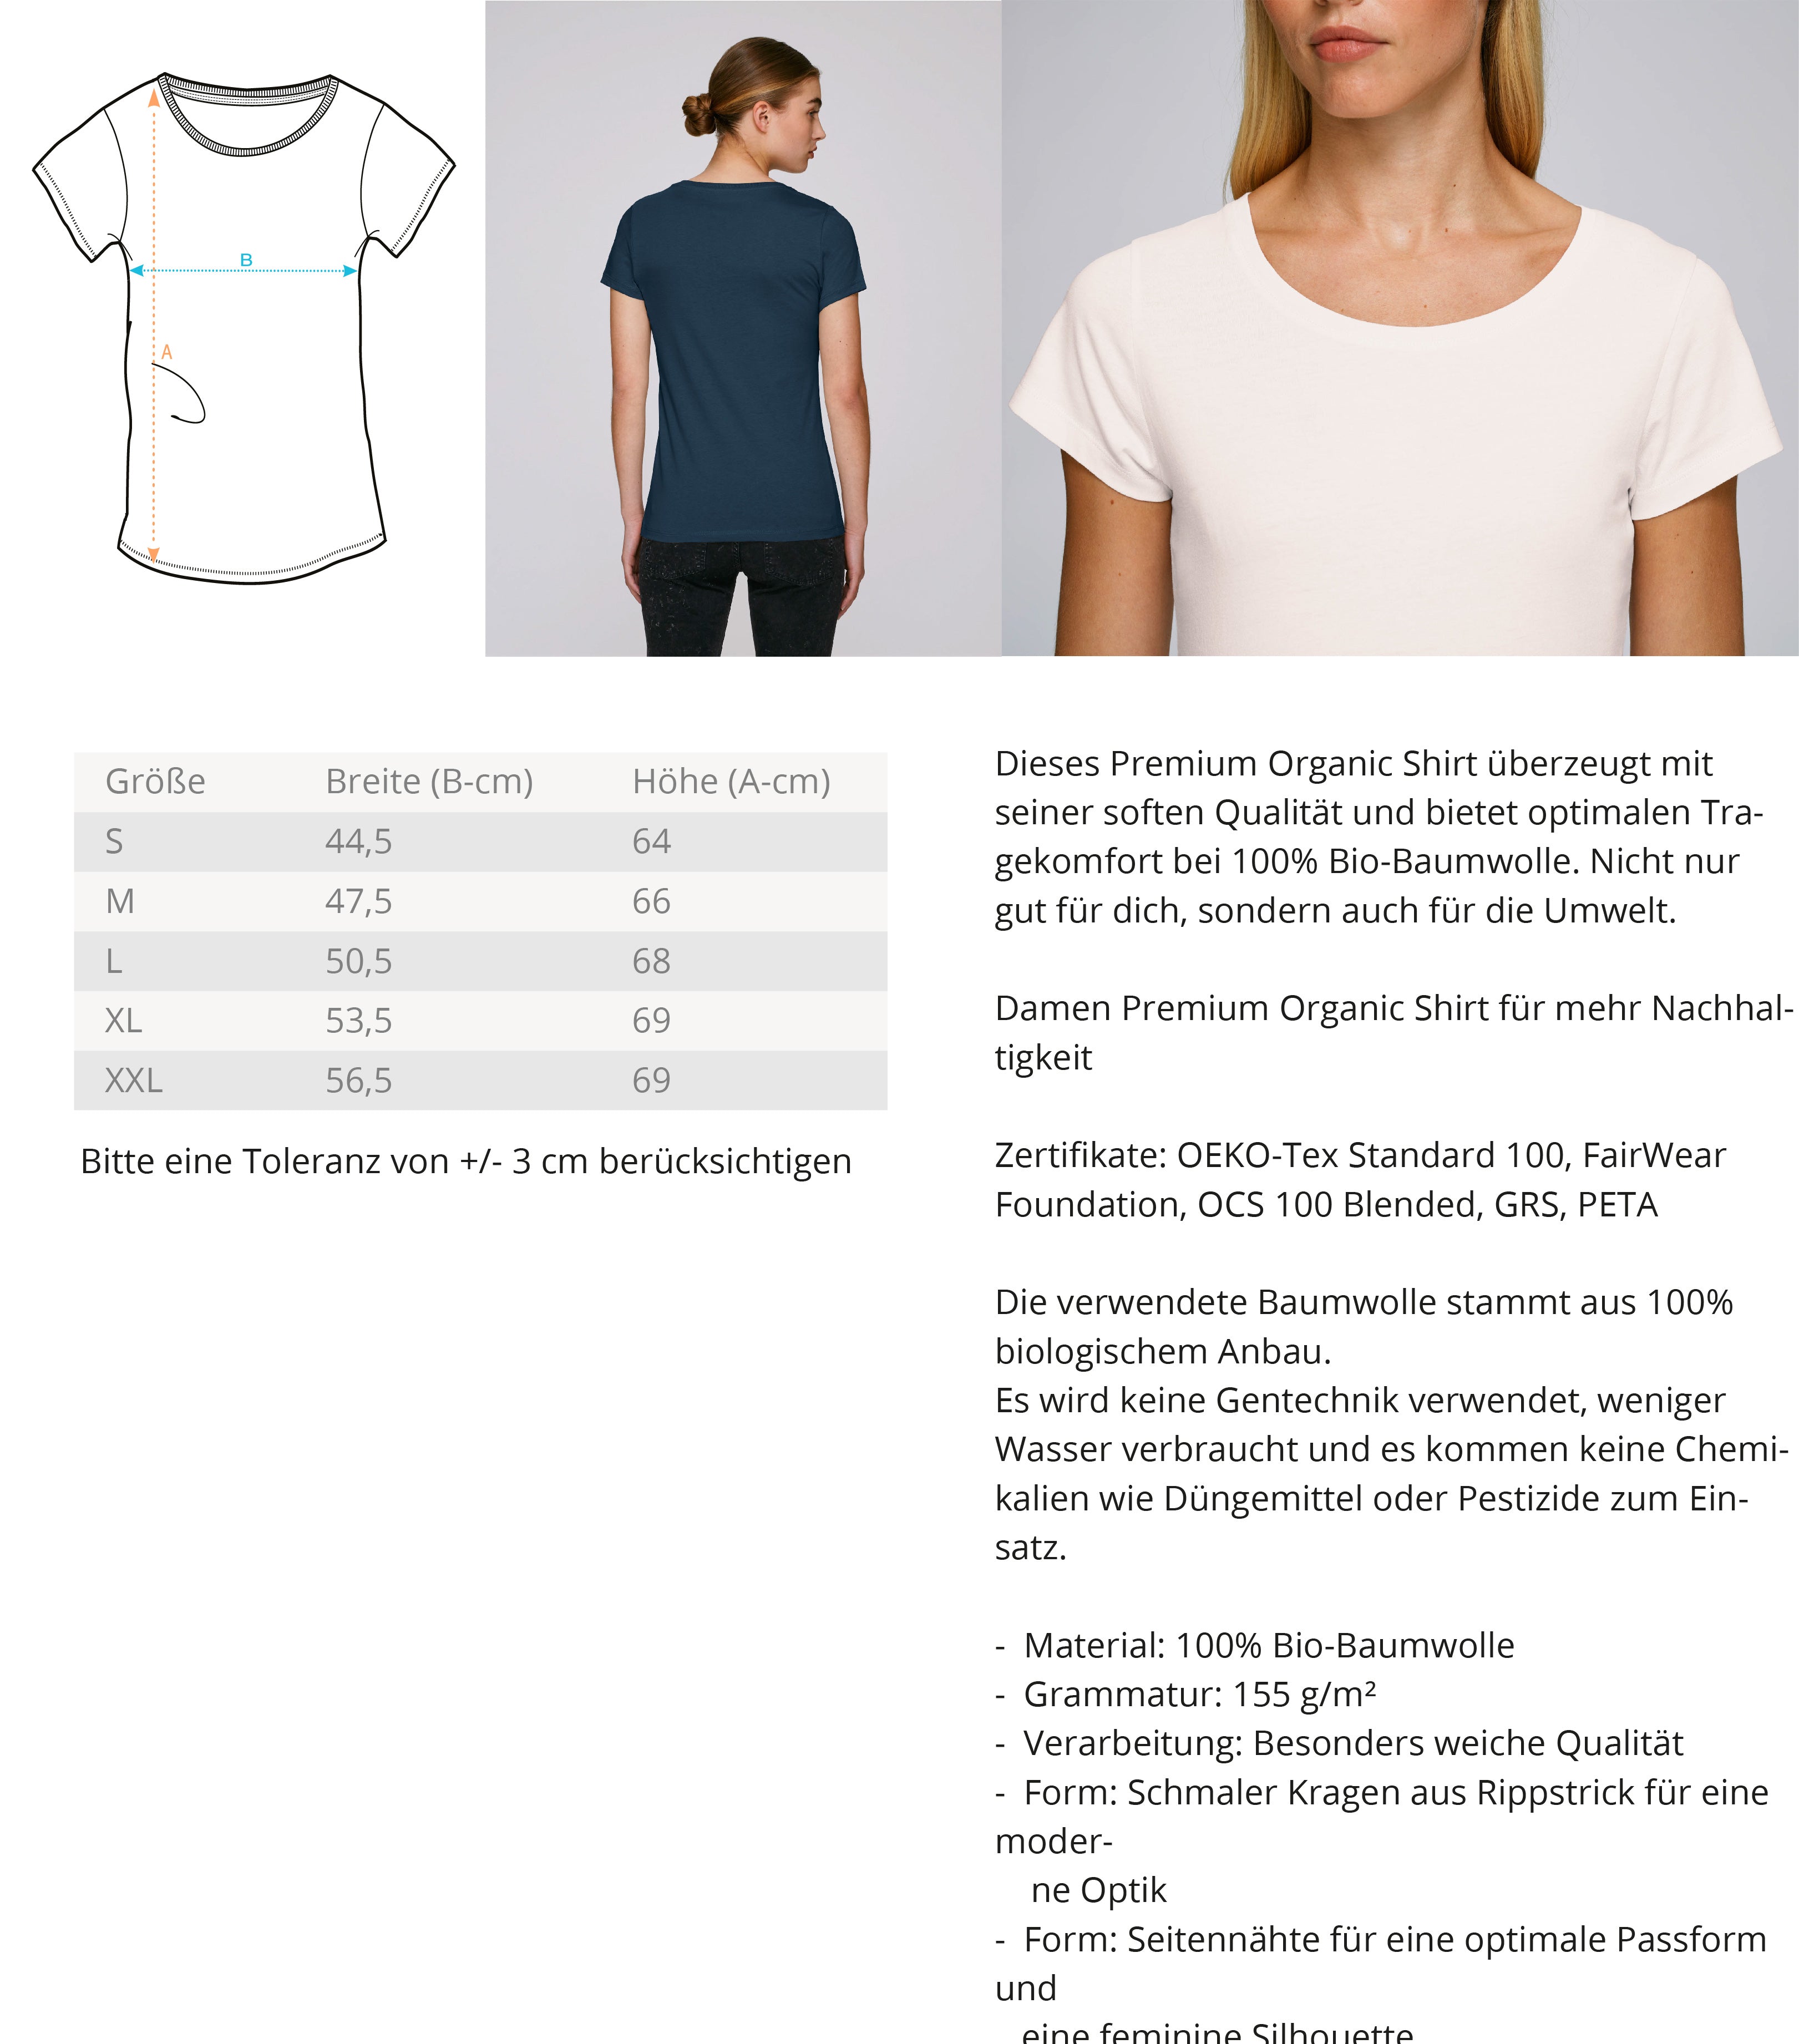 Schmetterling  - Damen Premium Organic Shirt